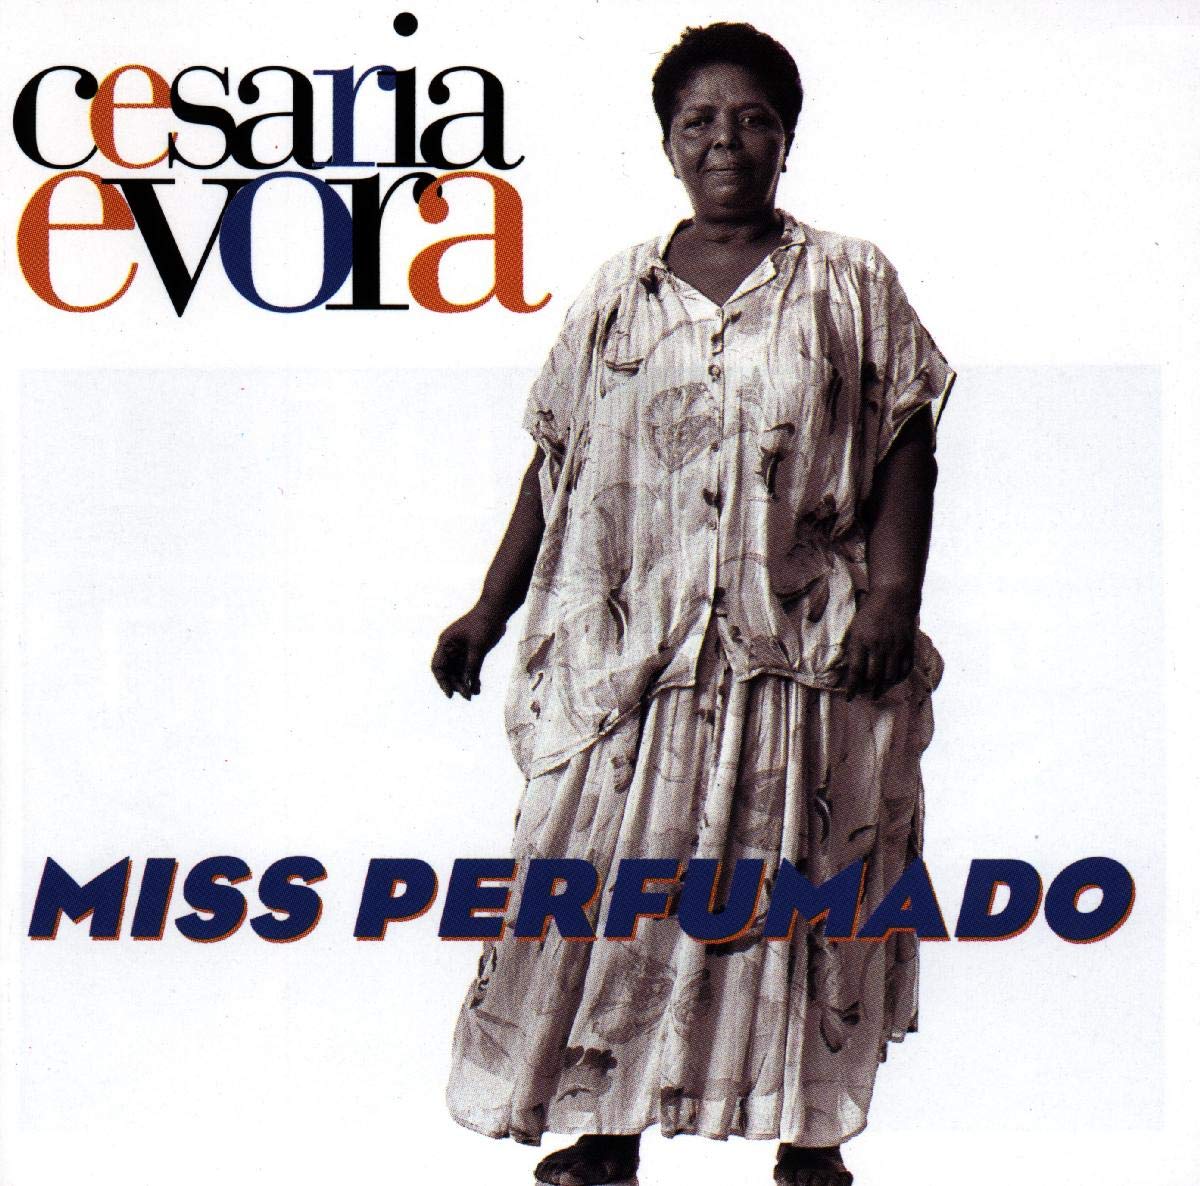 EVORA, CESARIA - MISS PERFUMADO - LP